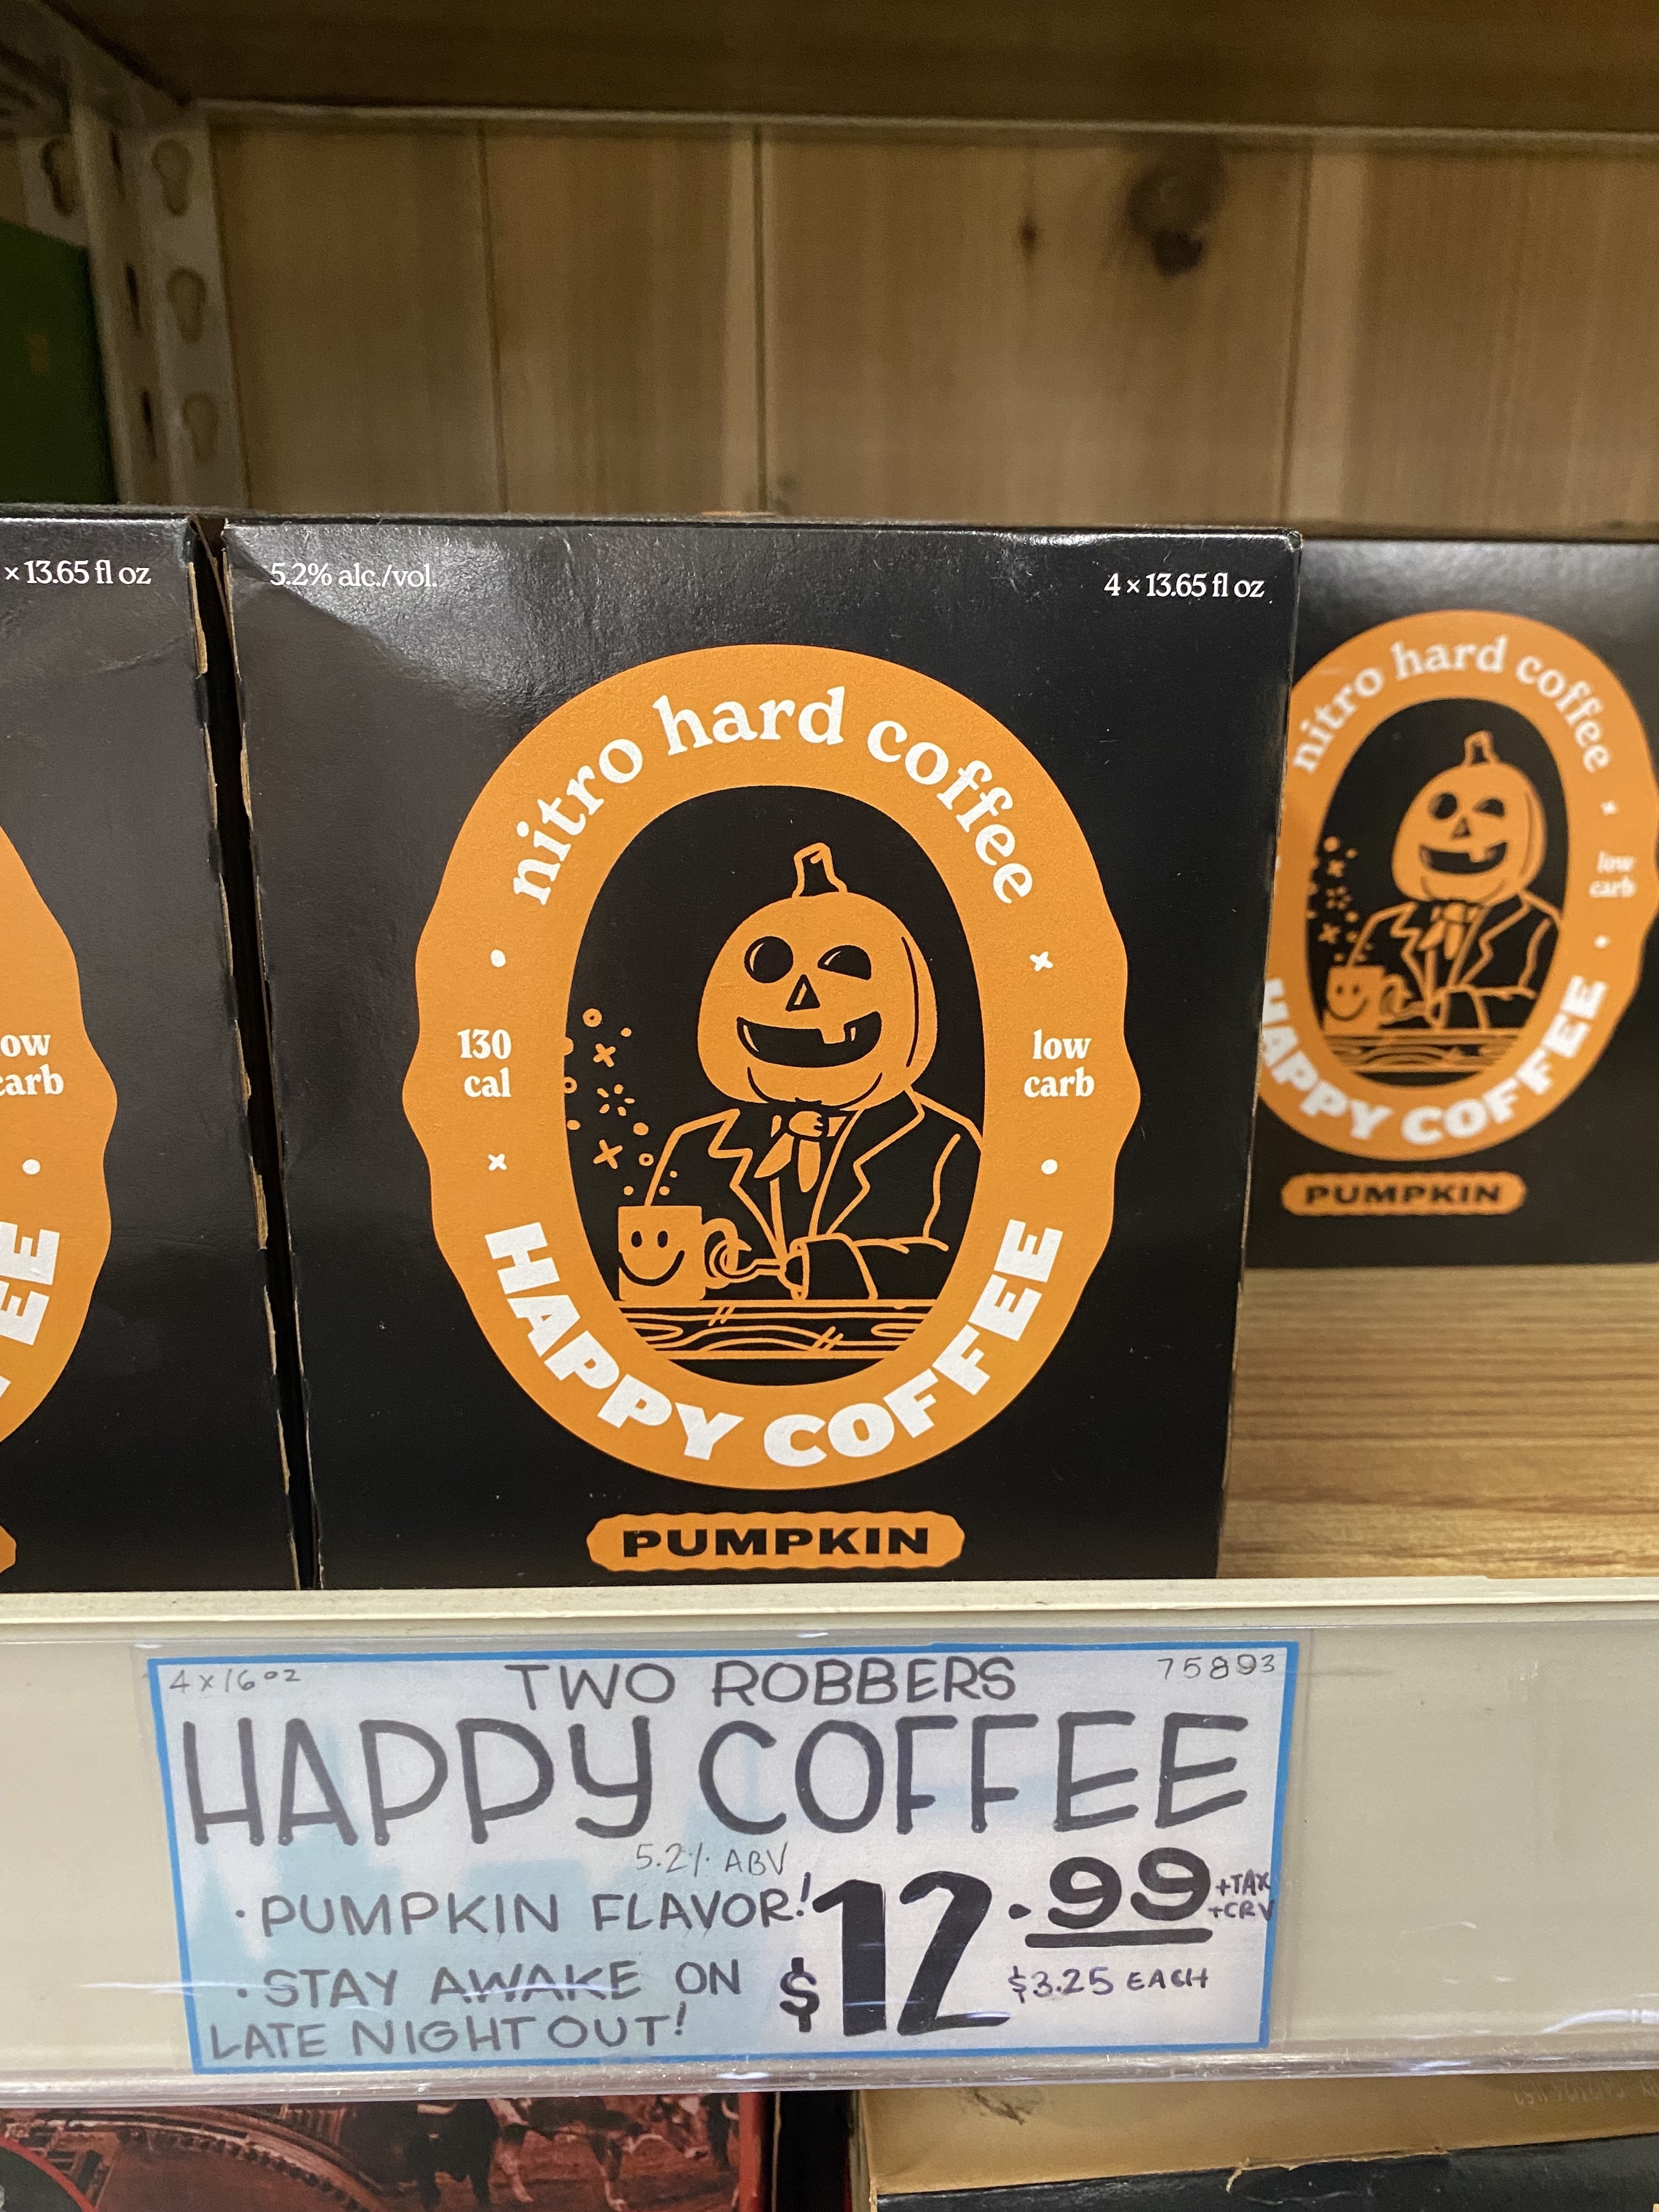 a box of pumpkin nitro hard coffee on a shelf